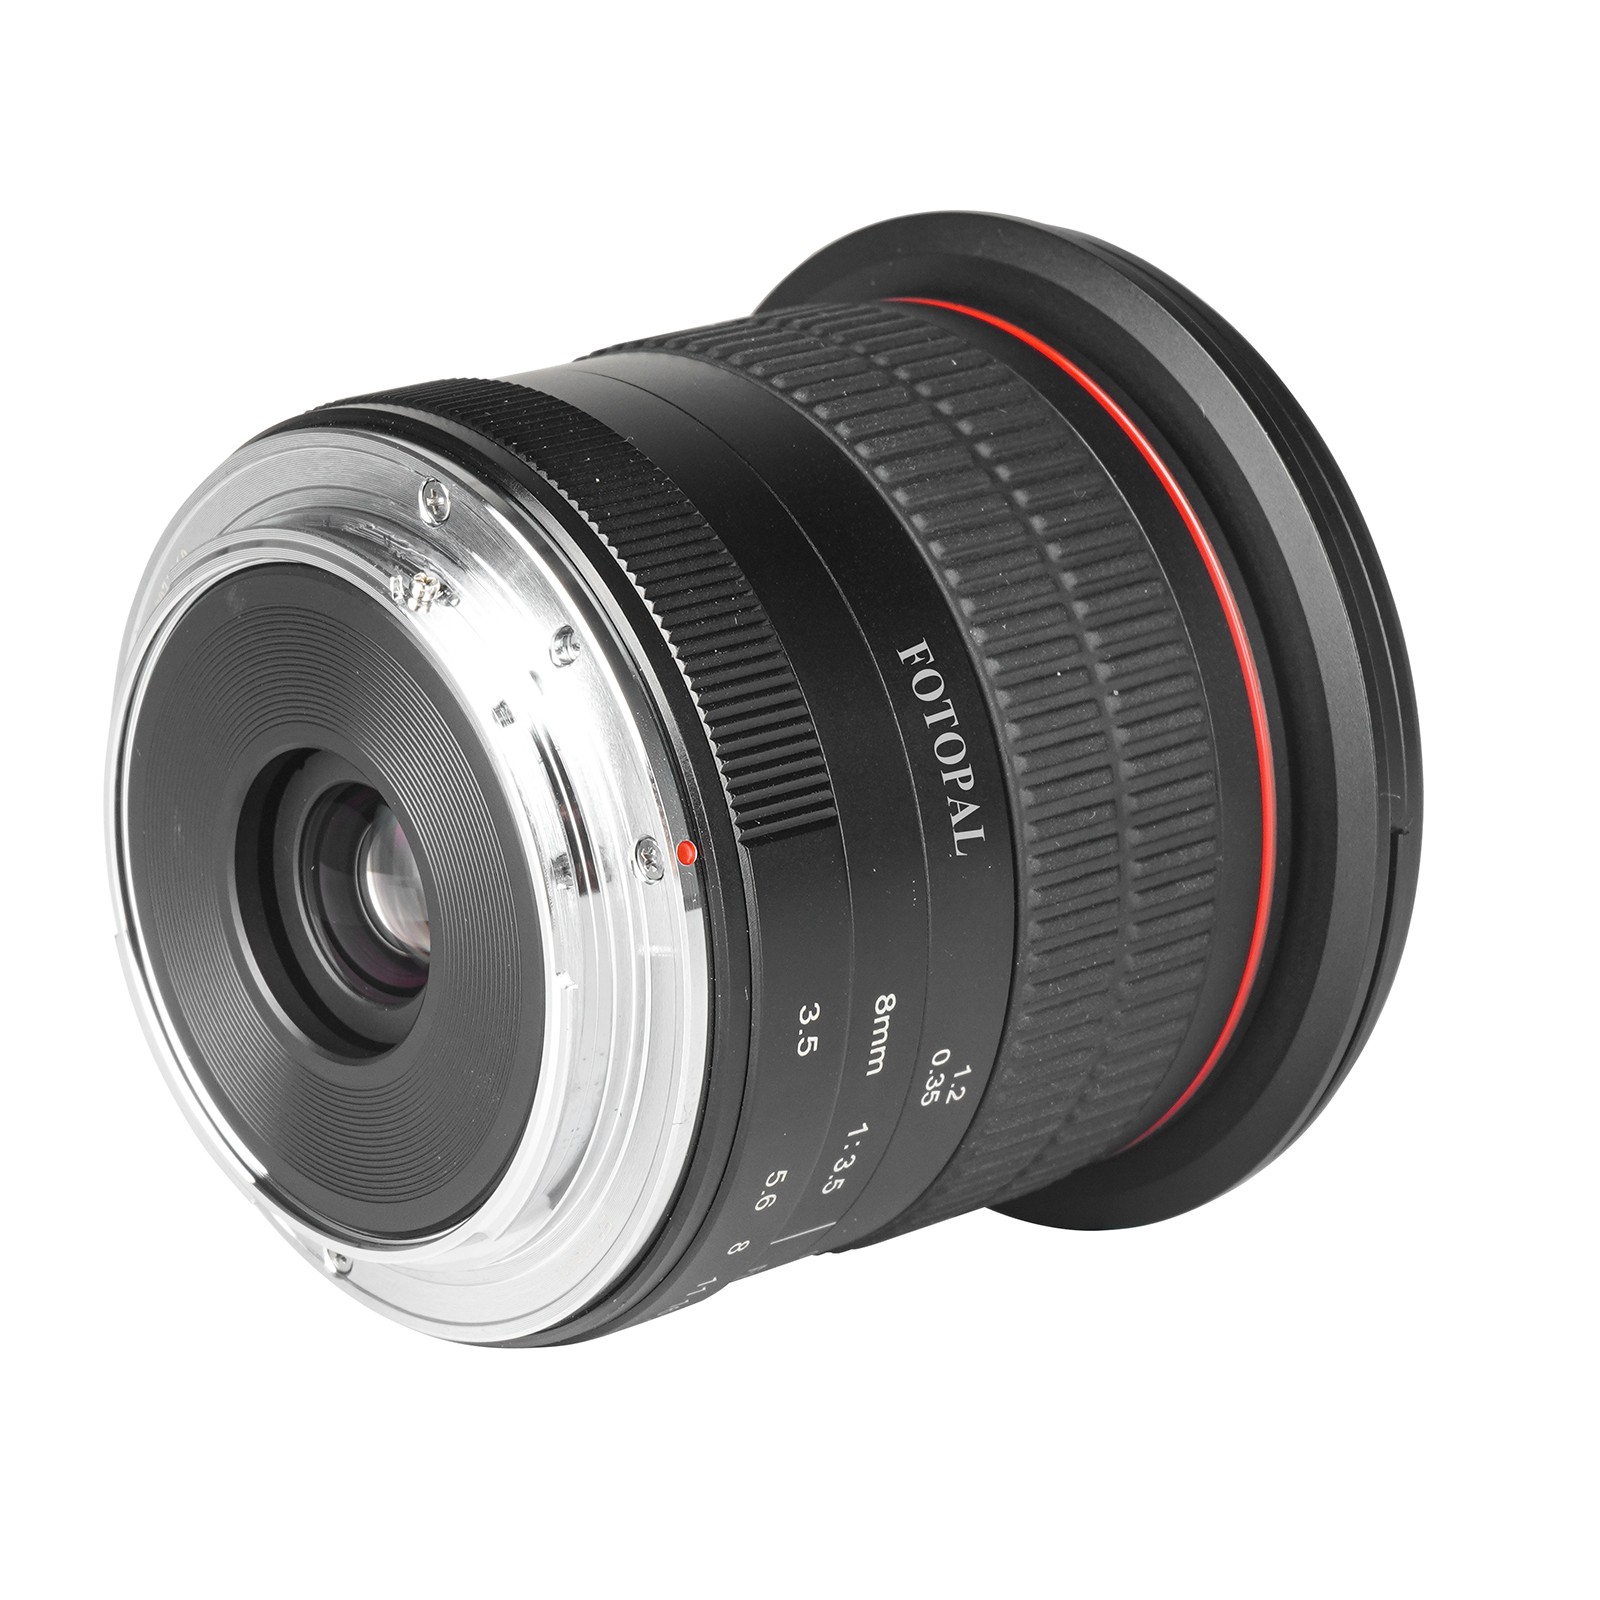 FOTOPAL 8mm f/3.5 Wide Angle Fisheye Lens